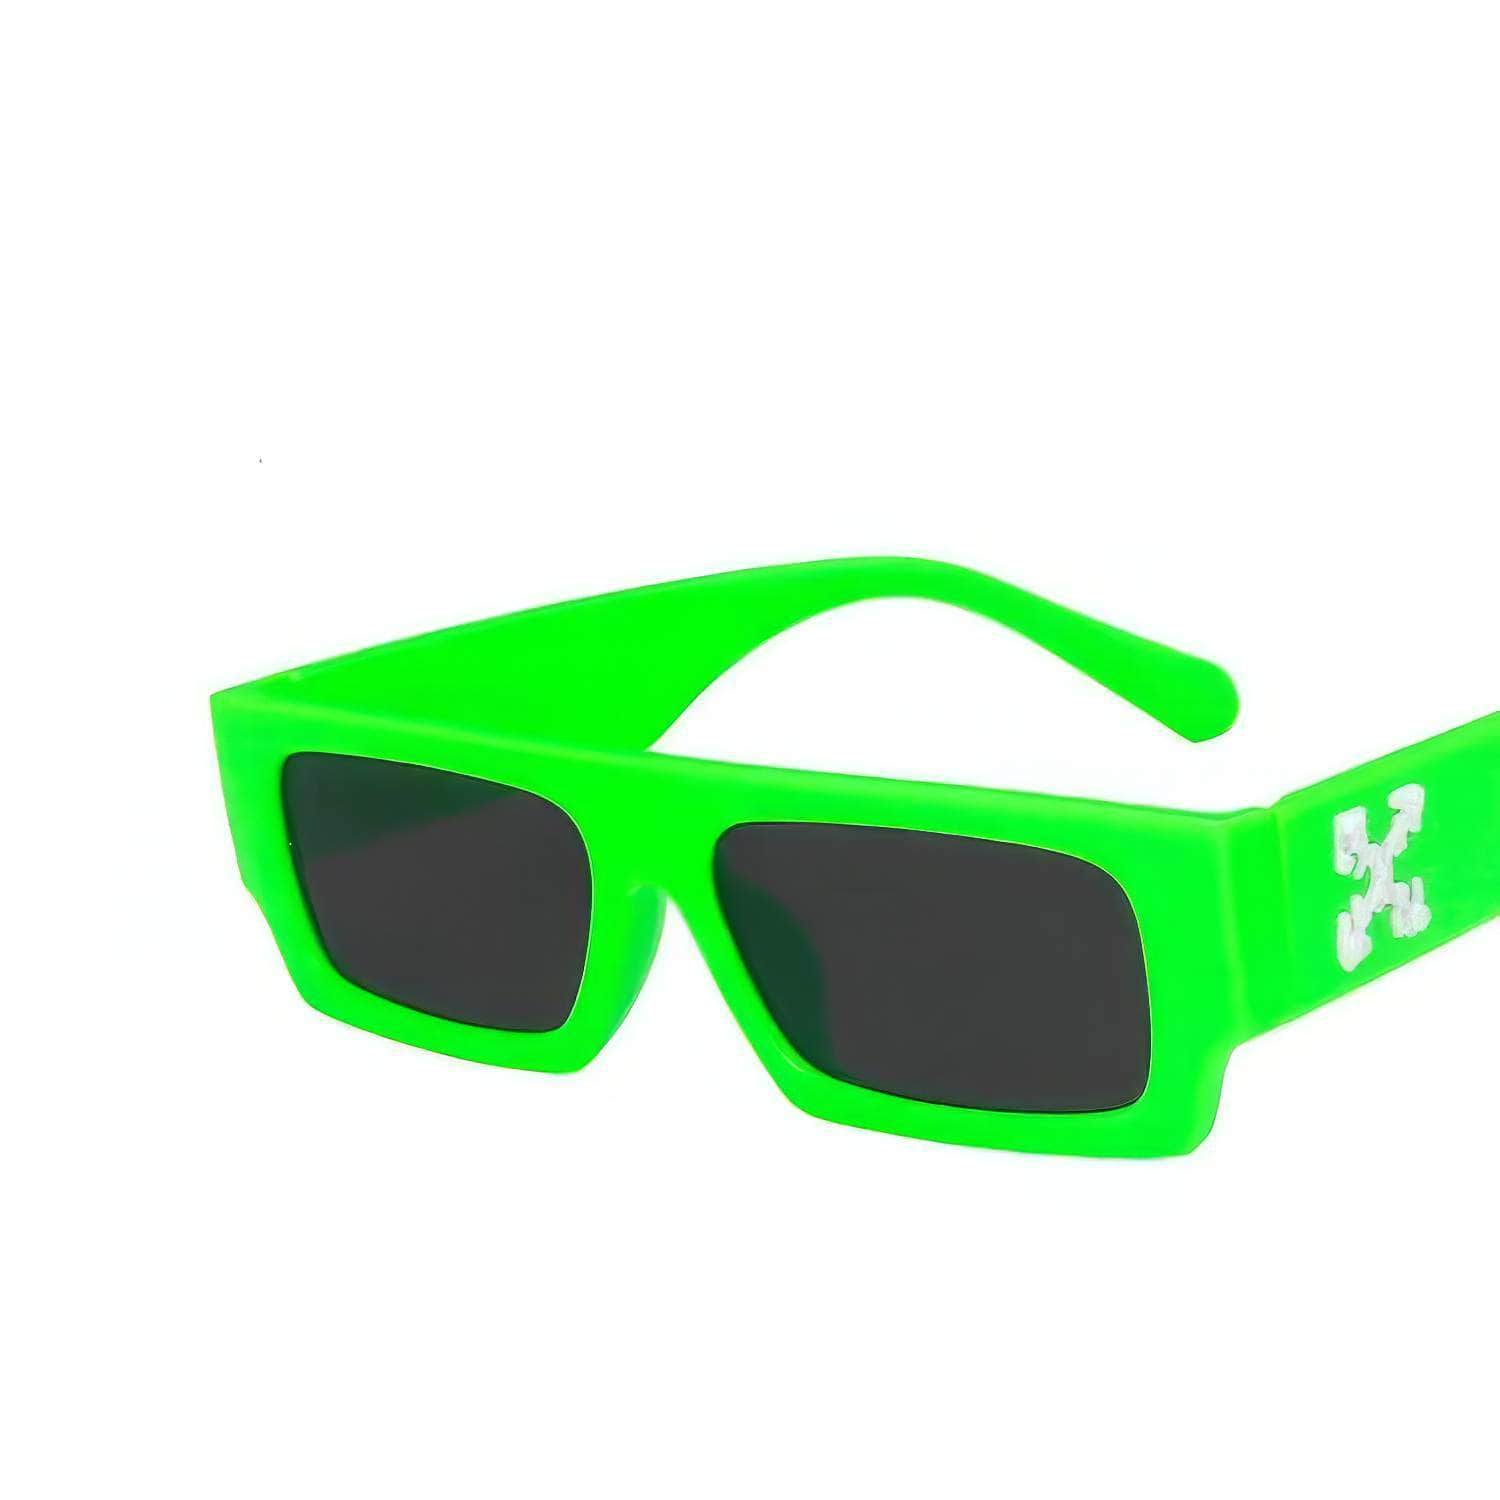 New Luxury Brand Rectangle Sunglasses